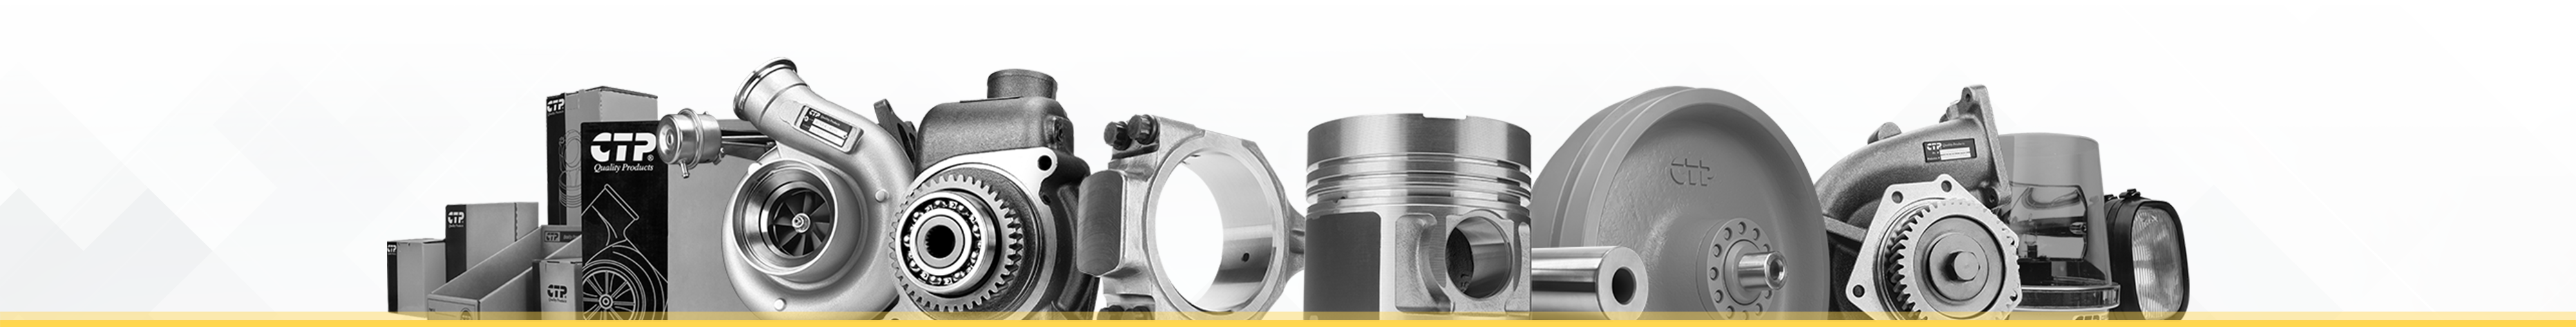 Footer parts costex 2 | hydraulic cylinder seal kits